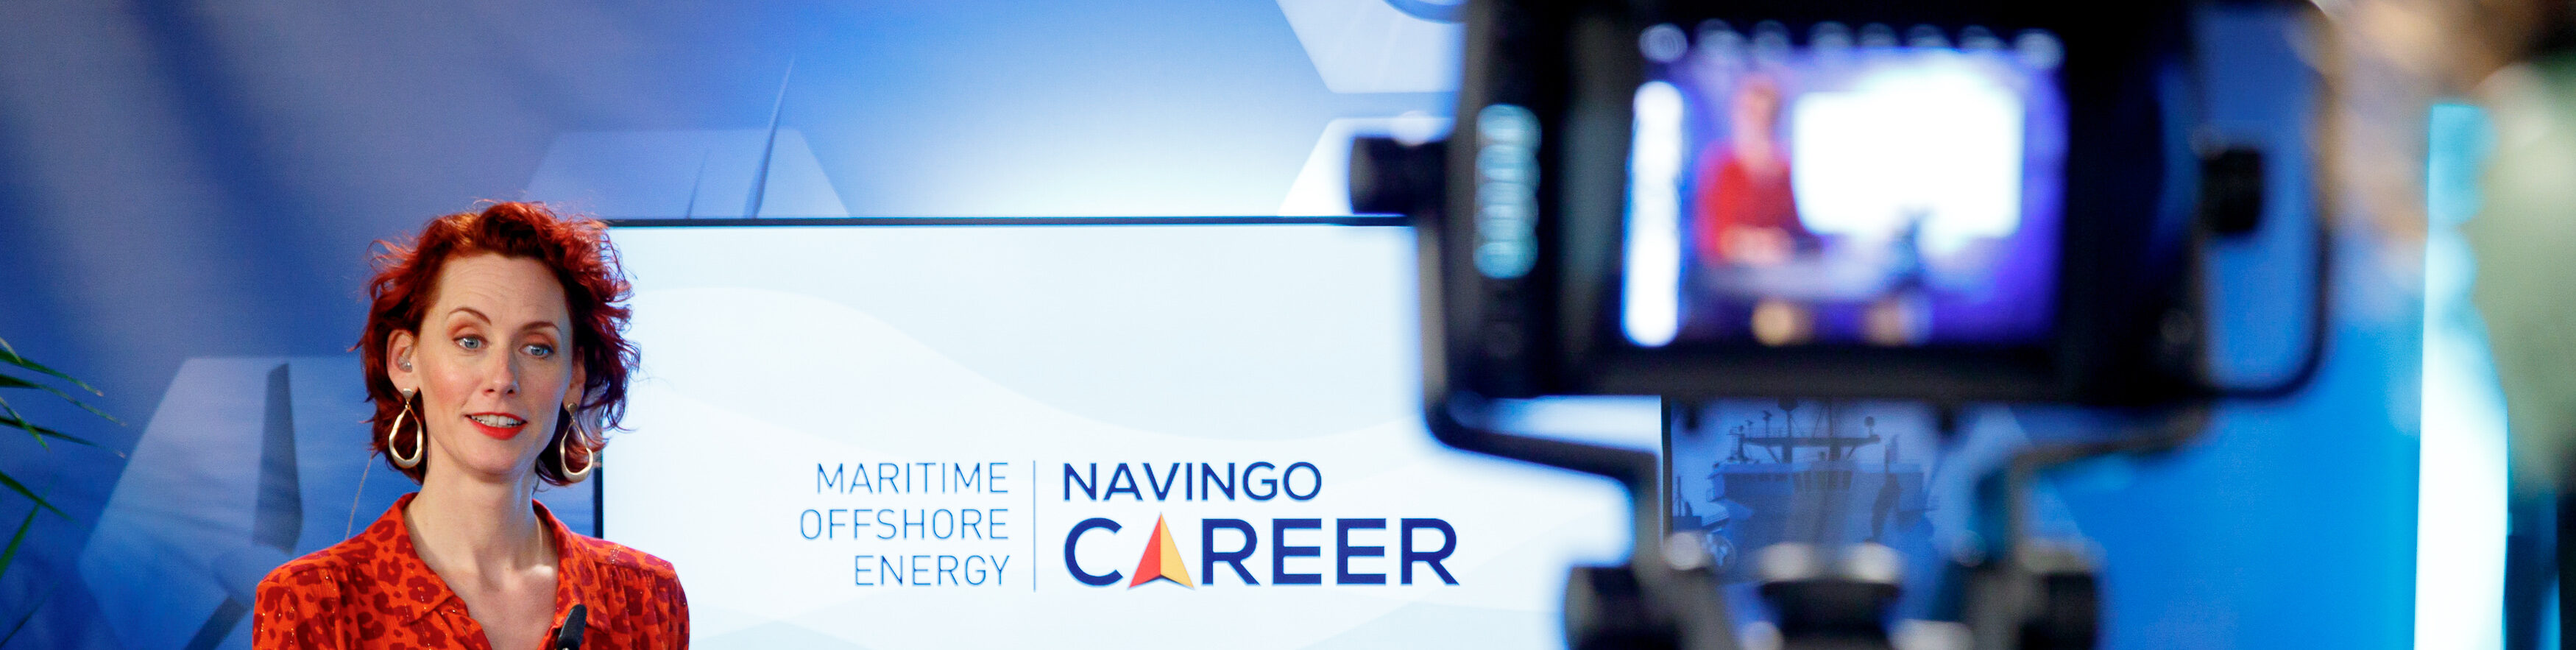 Navingo Career Event online